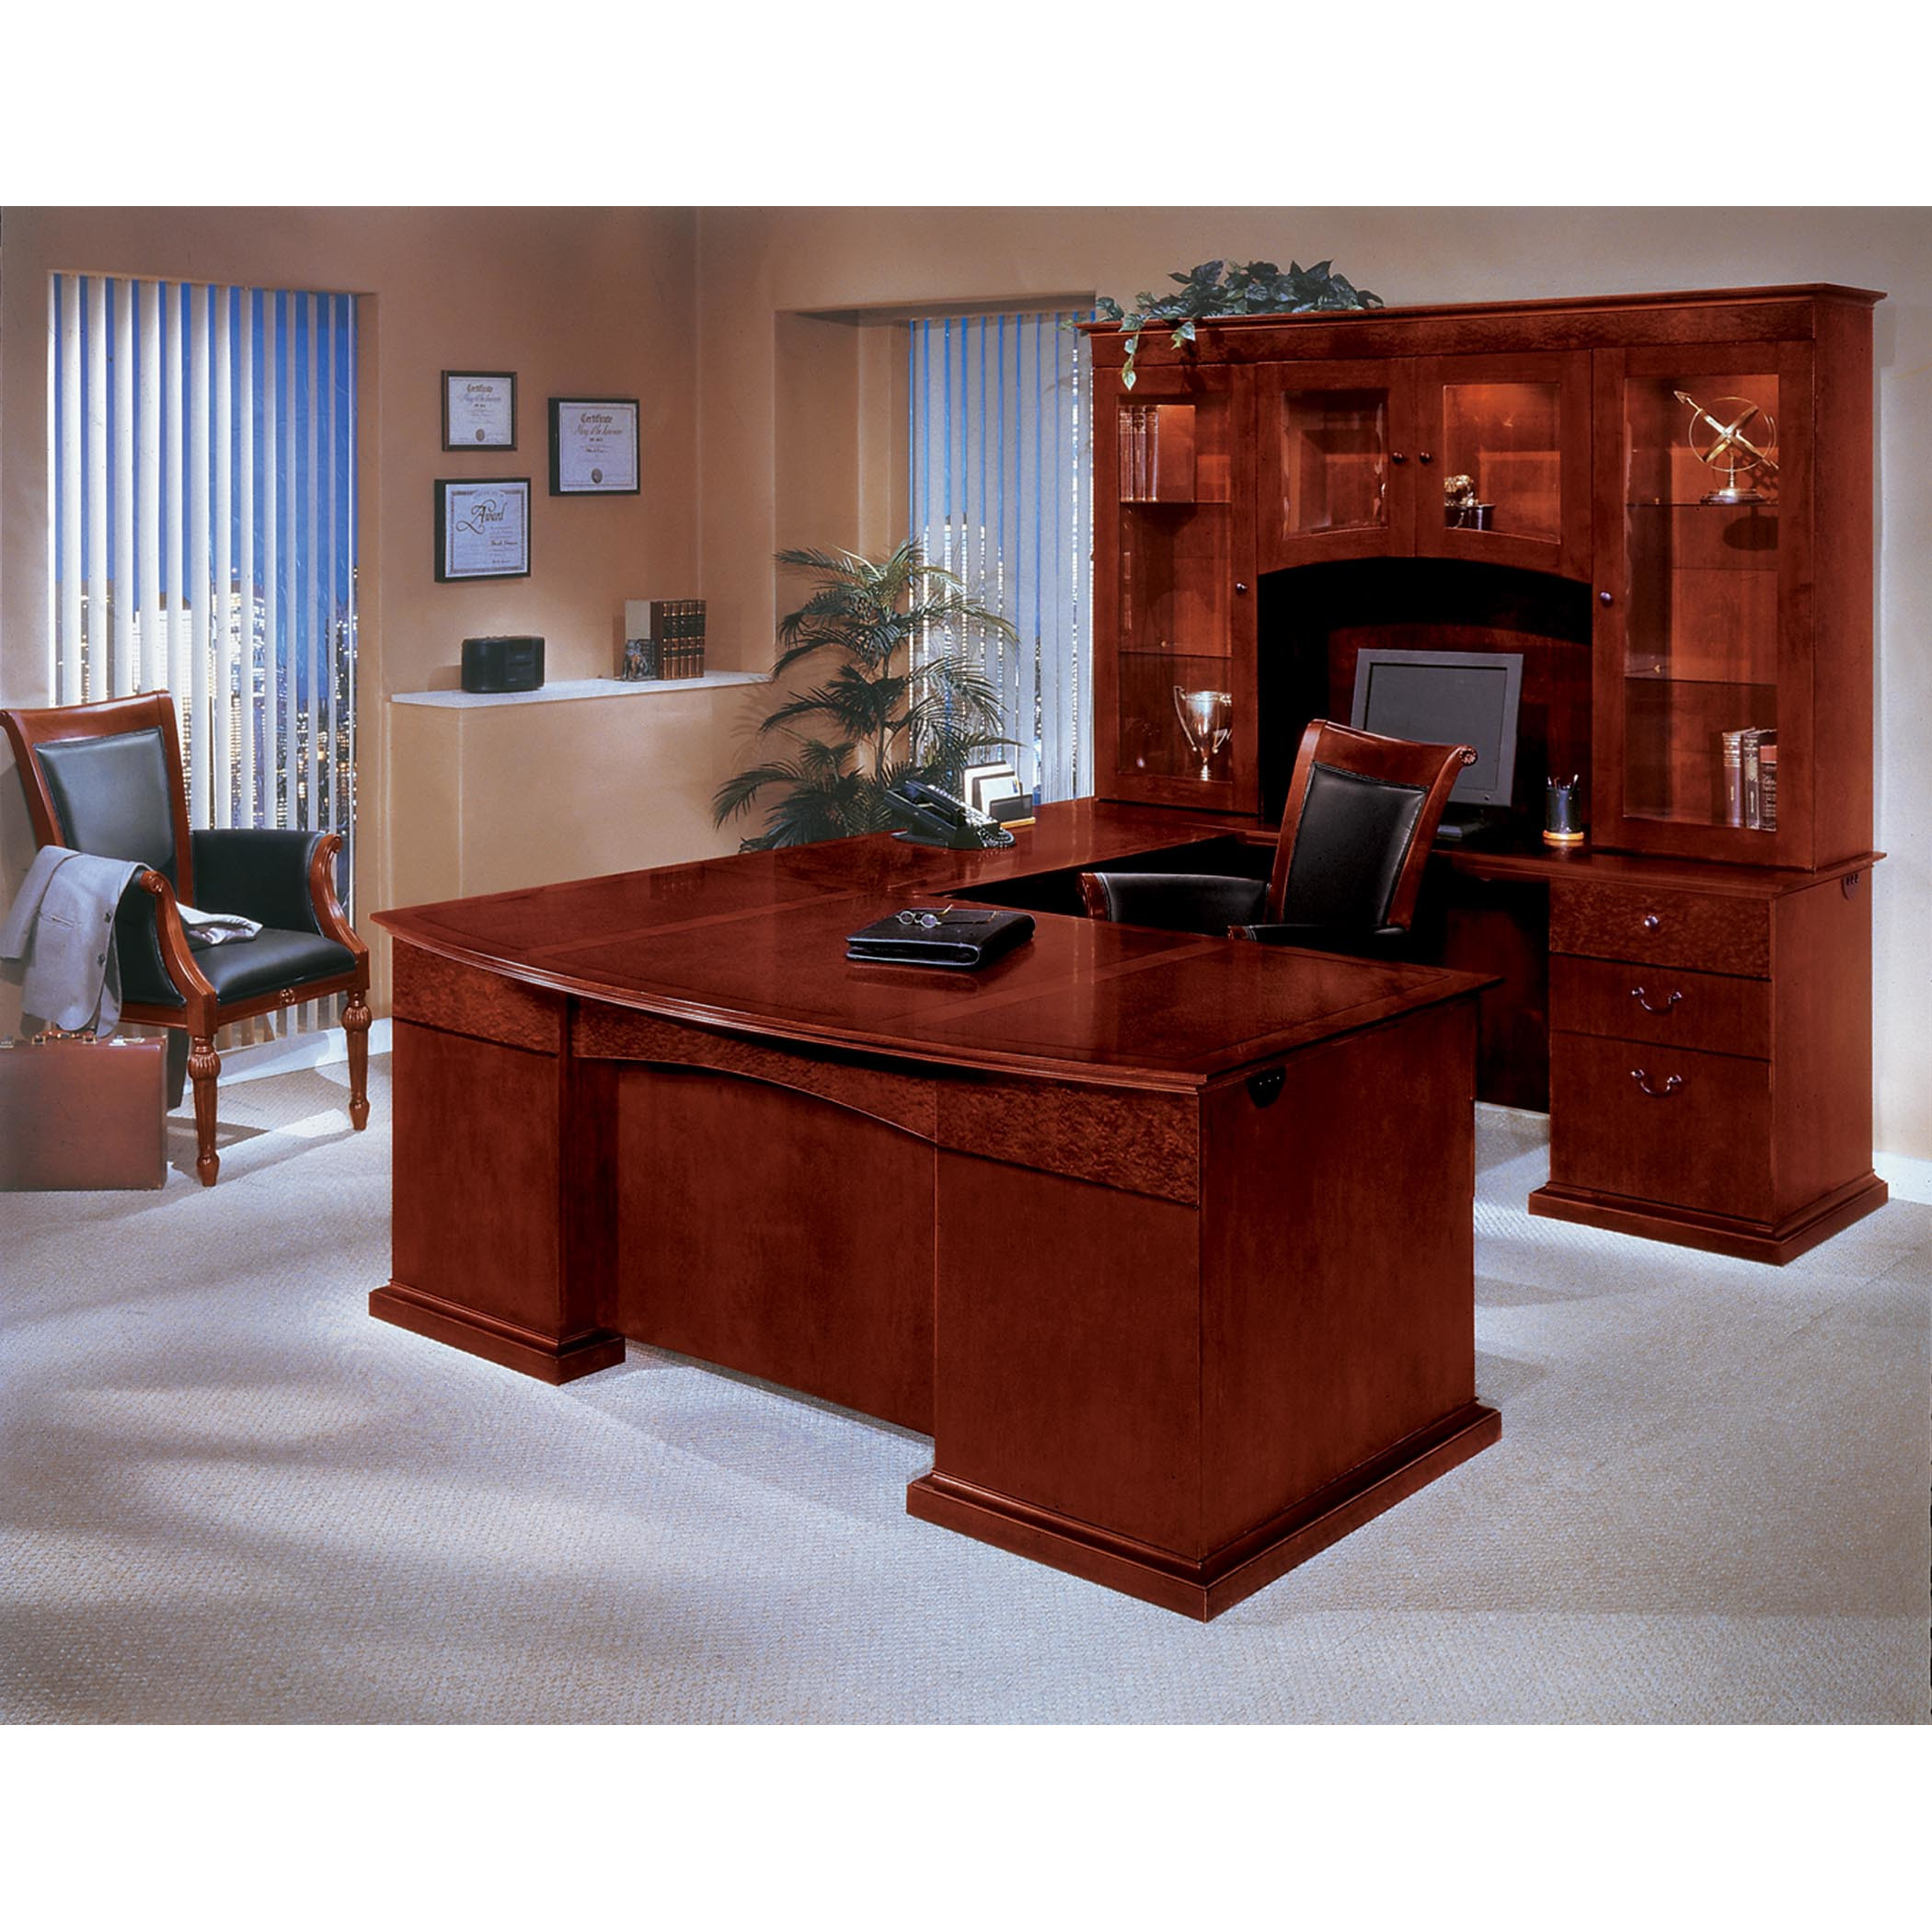 Best ideas about Wayfair Office Furniture
. Save or Pin Wayfair fice Desk Now.